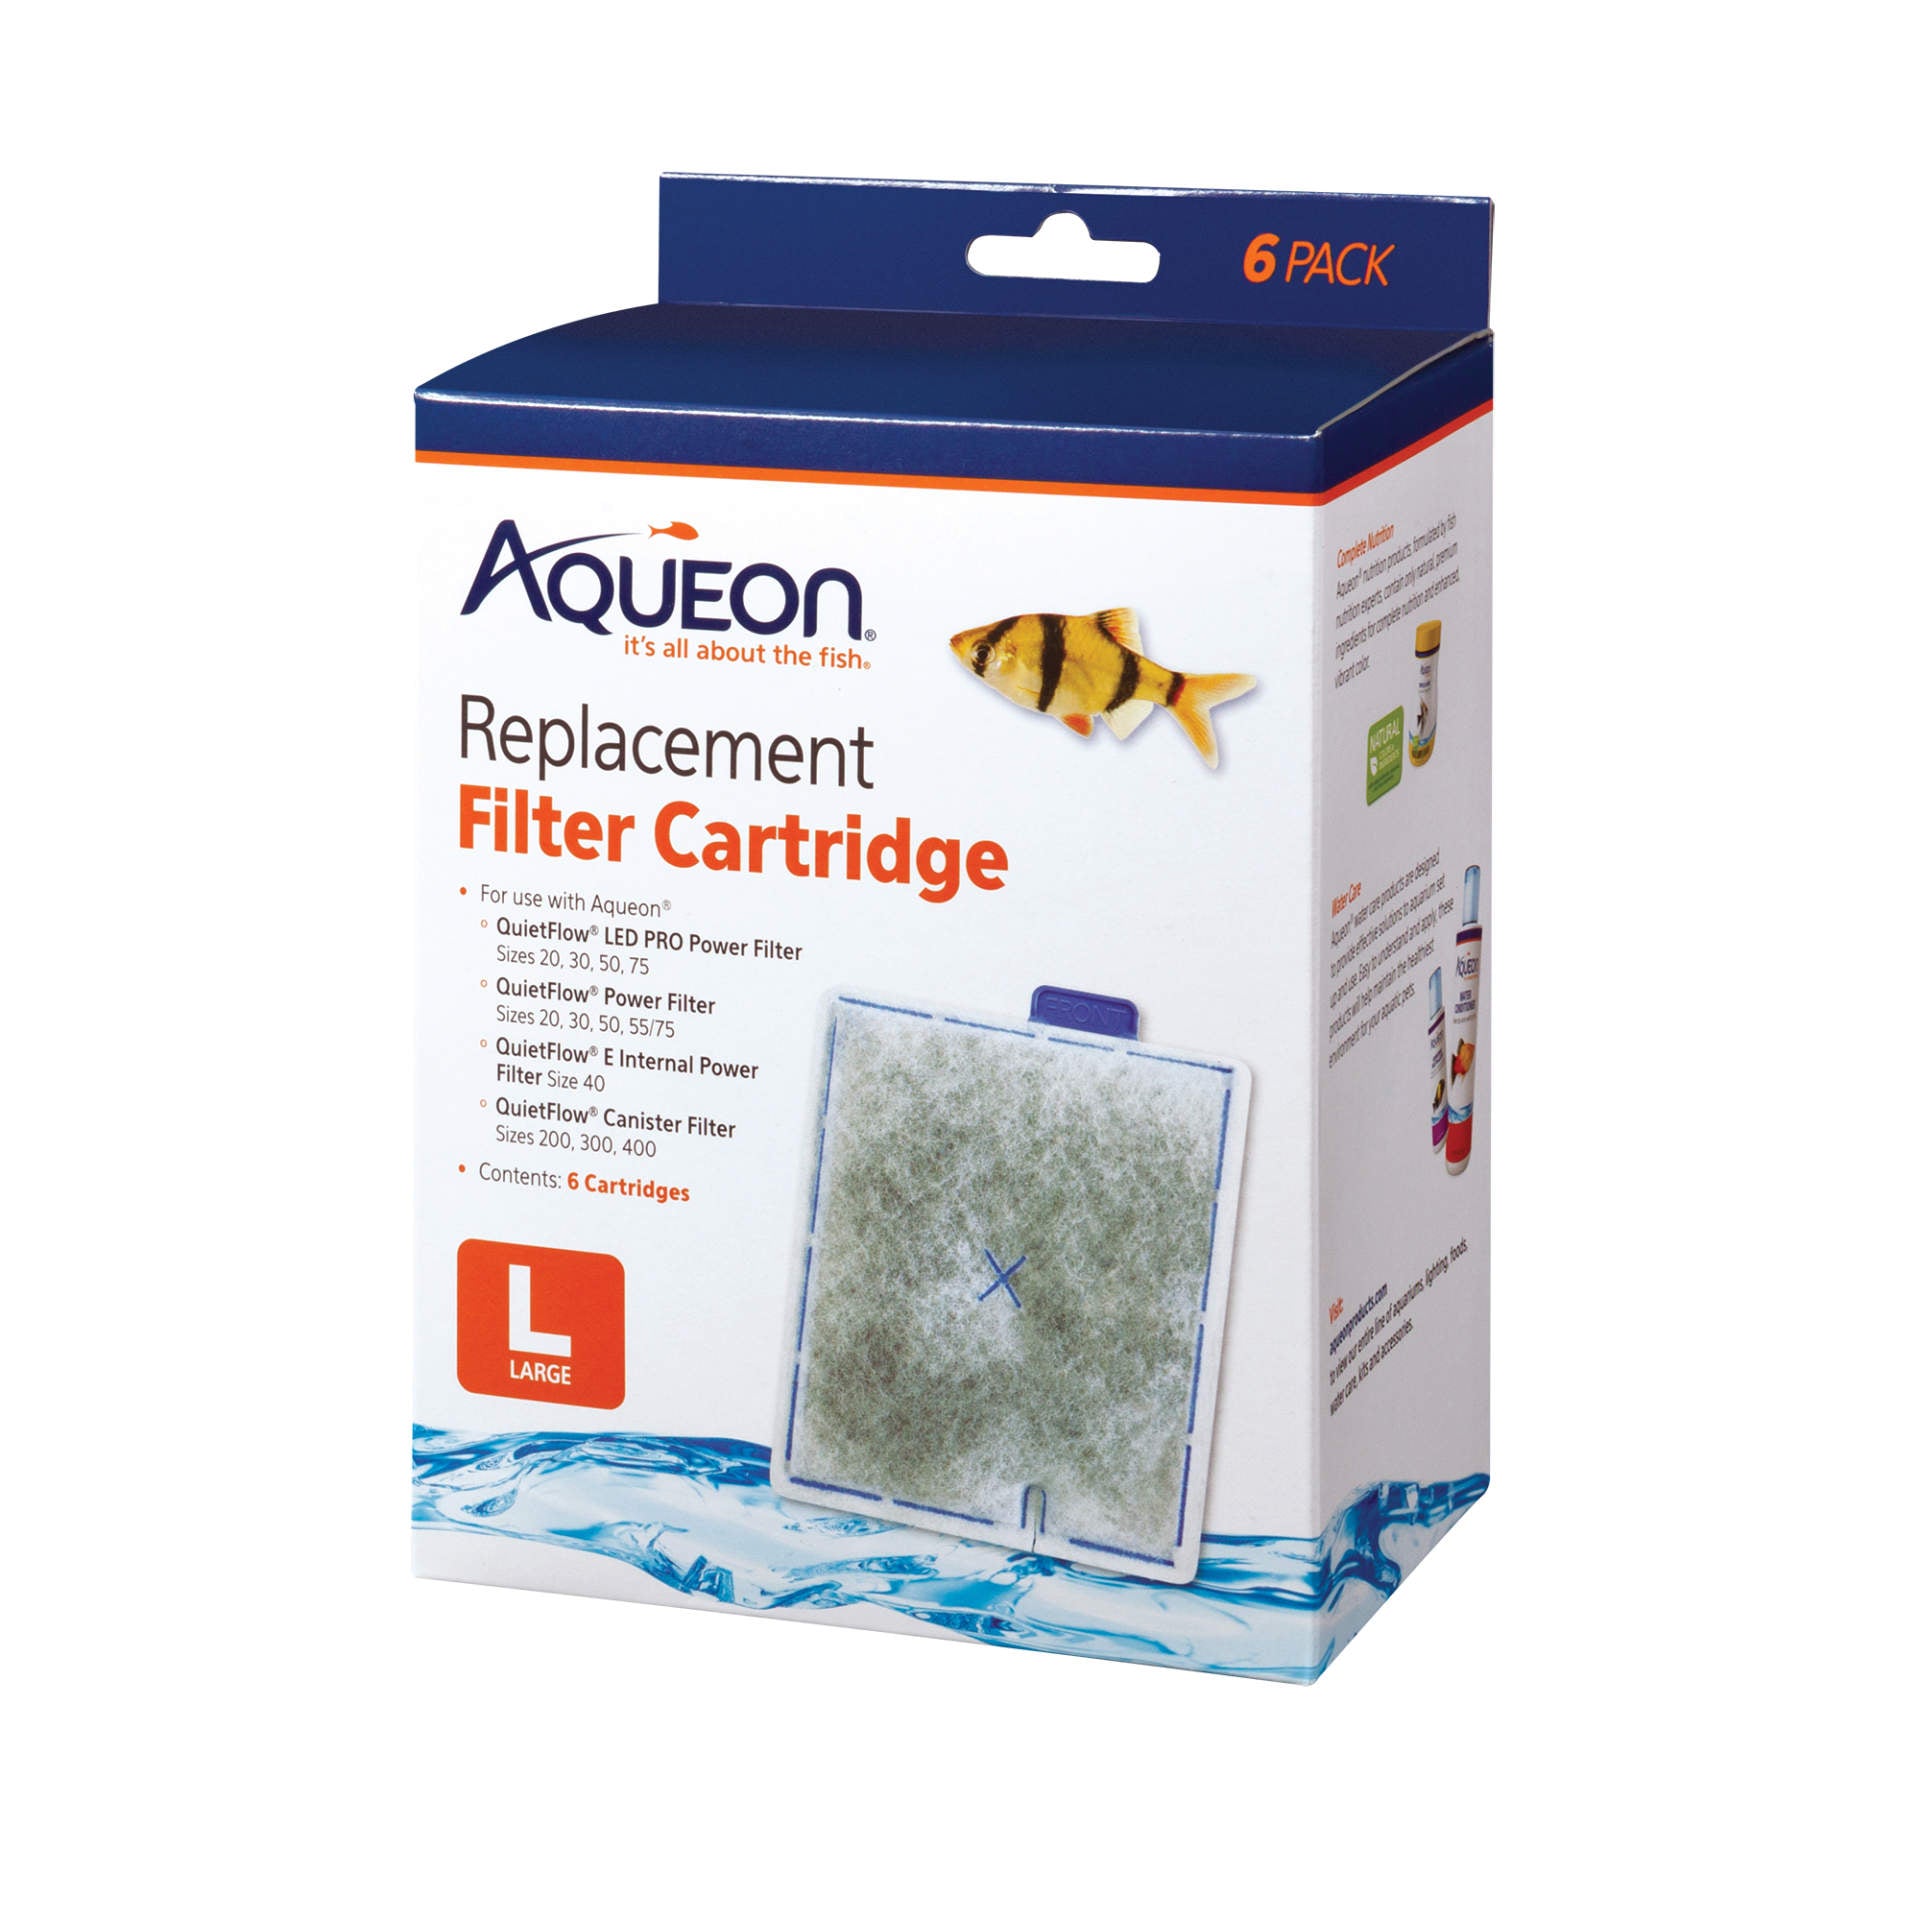 Aqueon Replacement Filter Cartridges 6 pack Large 5.24″ x 1.75″ x 5.7″